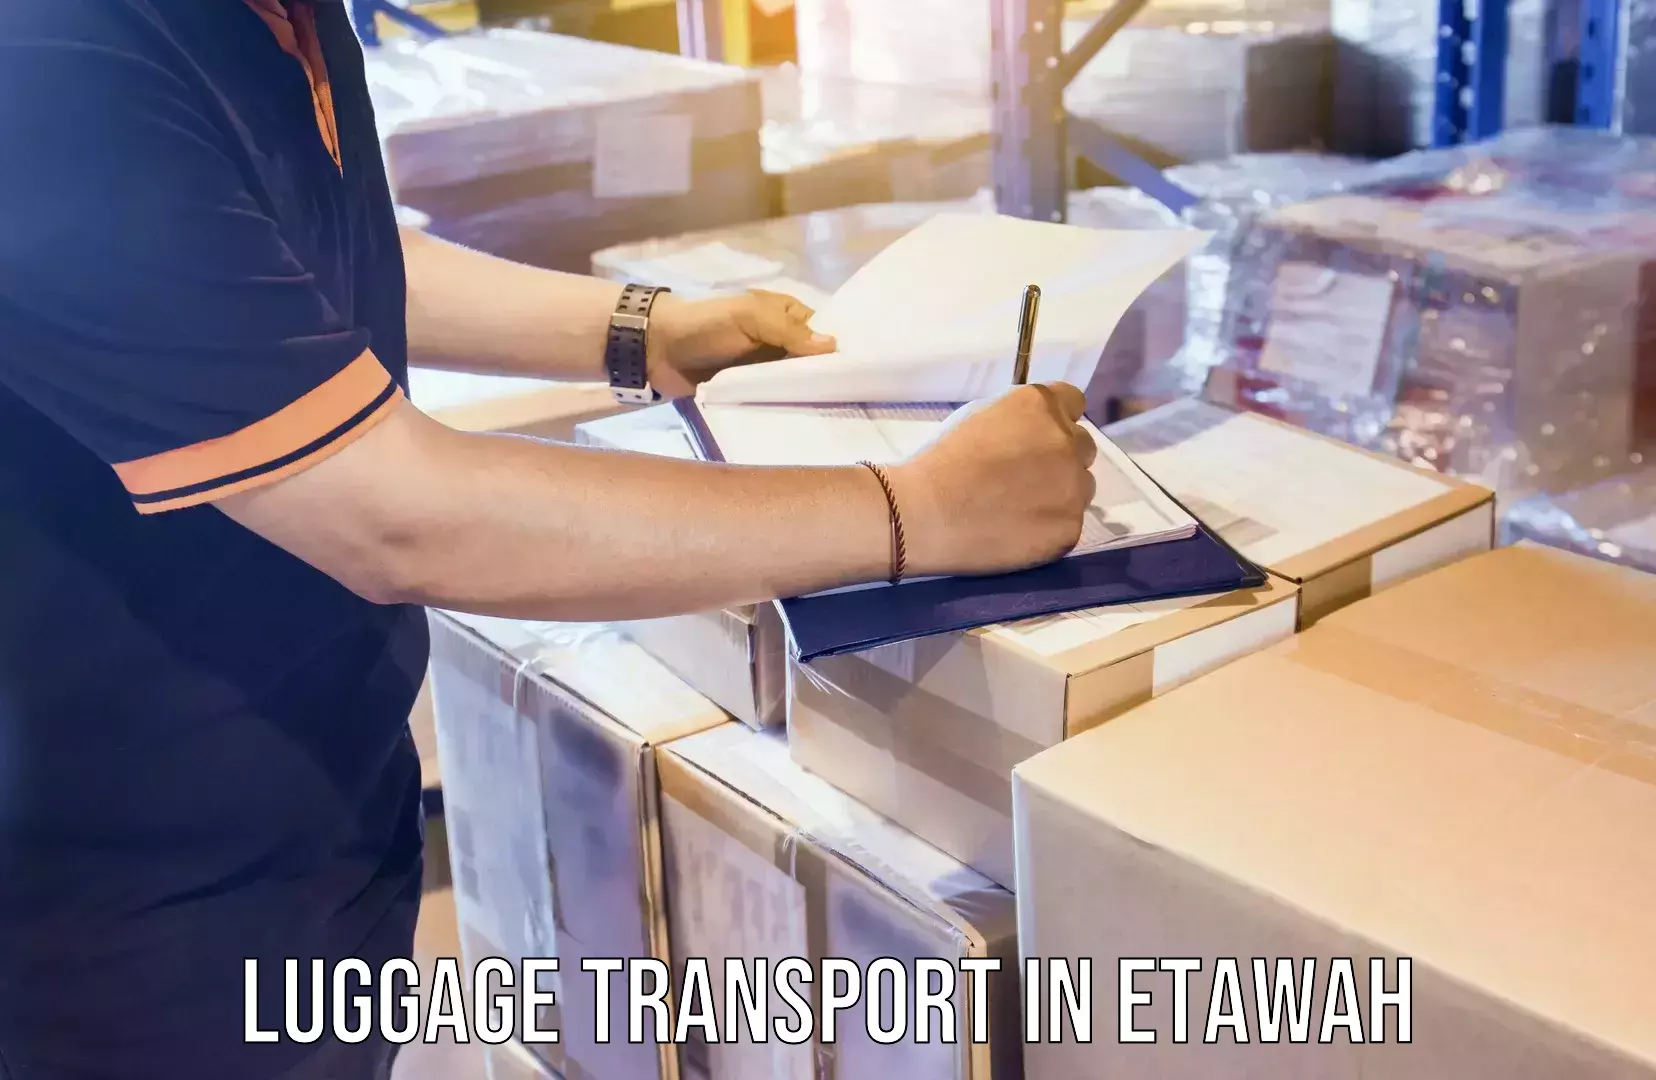 Luggage shipment specialists in Etawah